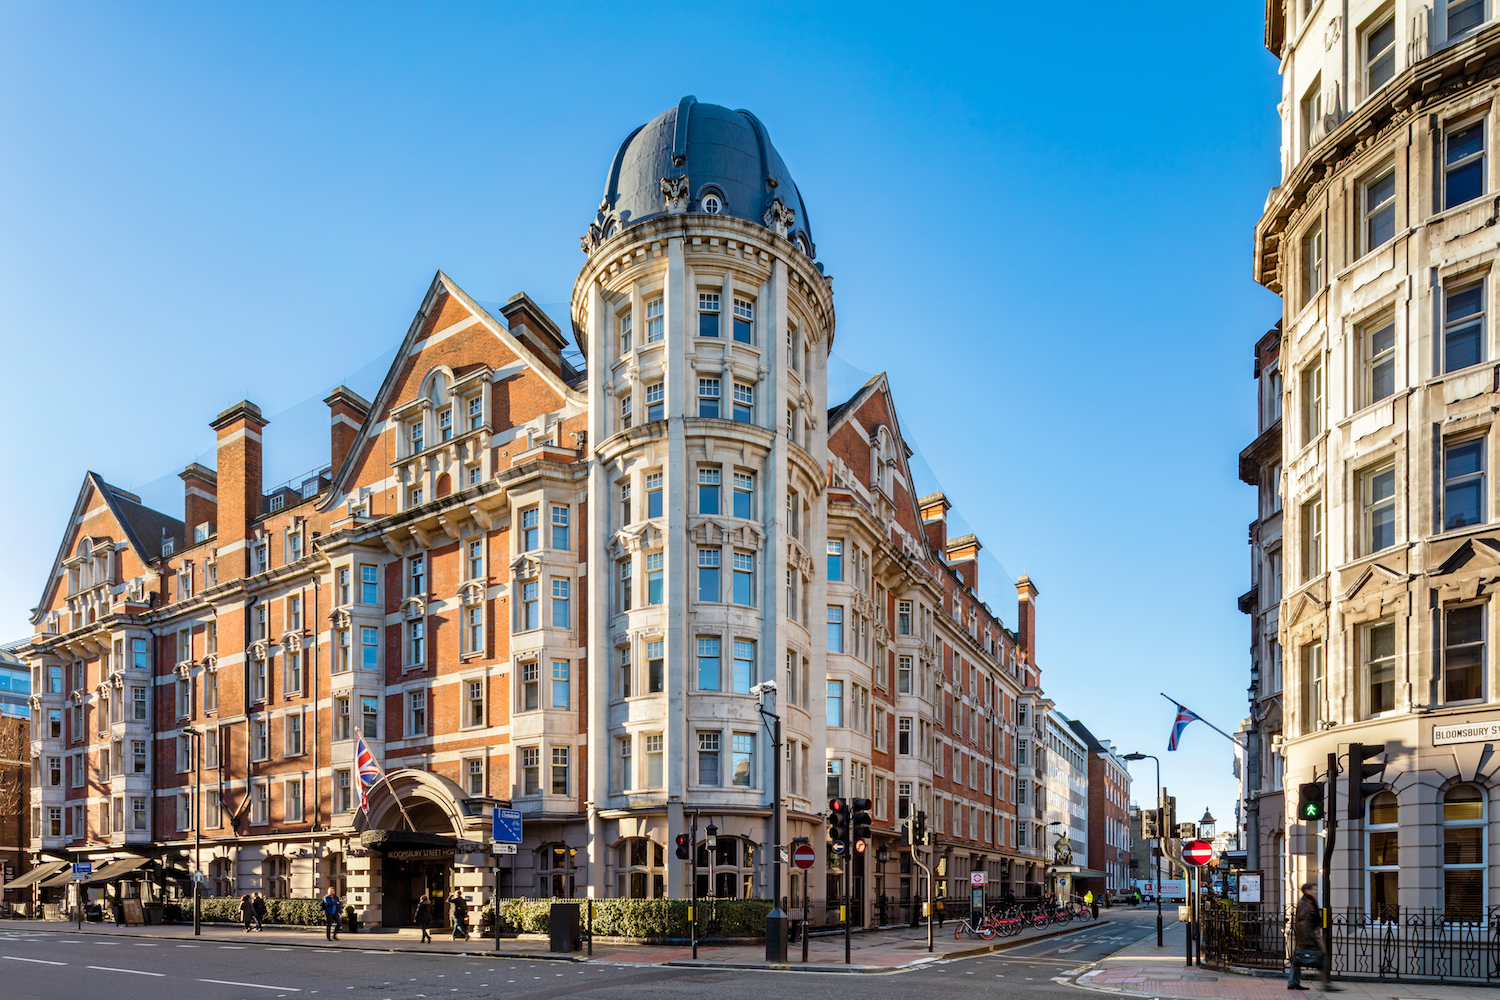 PAUSE Visits: The Bloomsbury Street Hotel